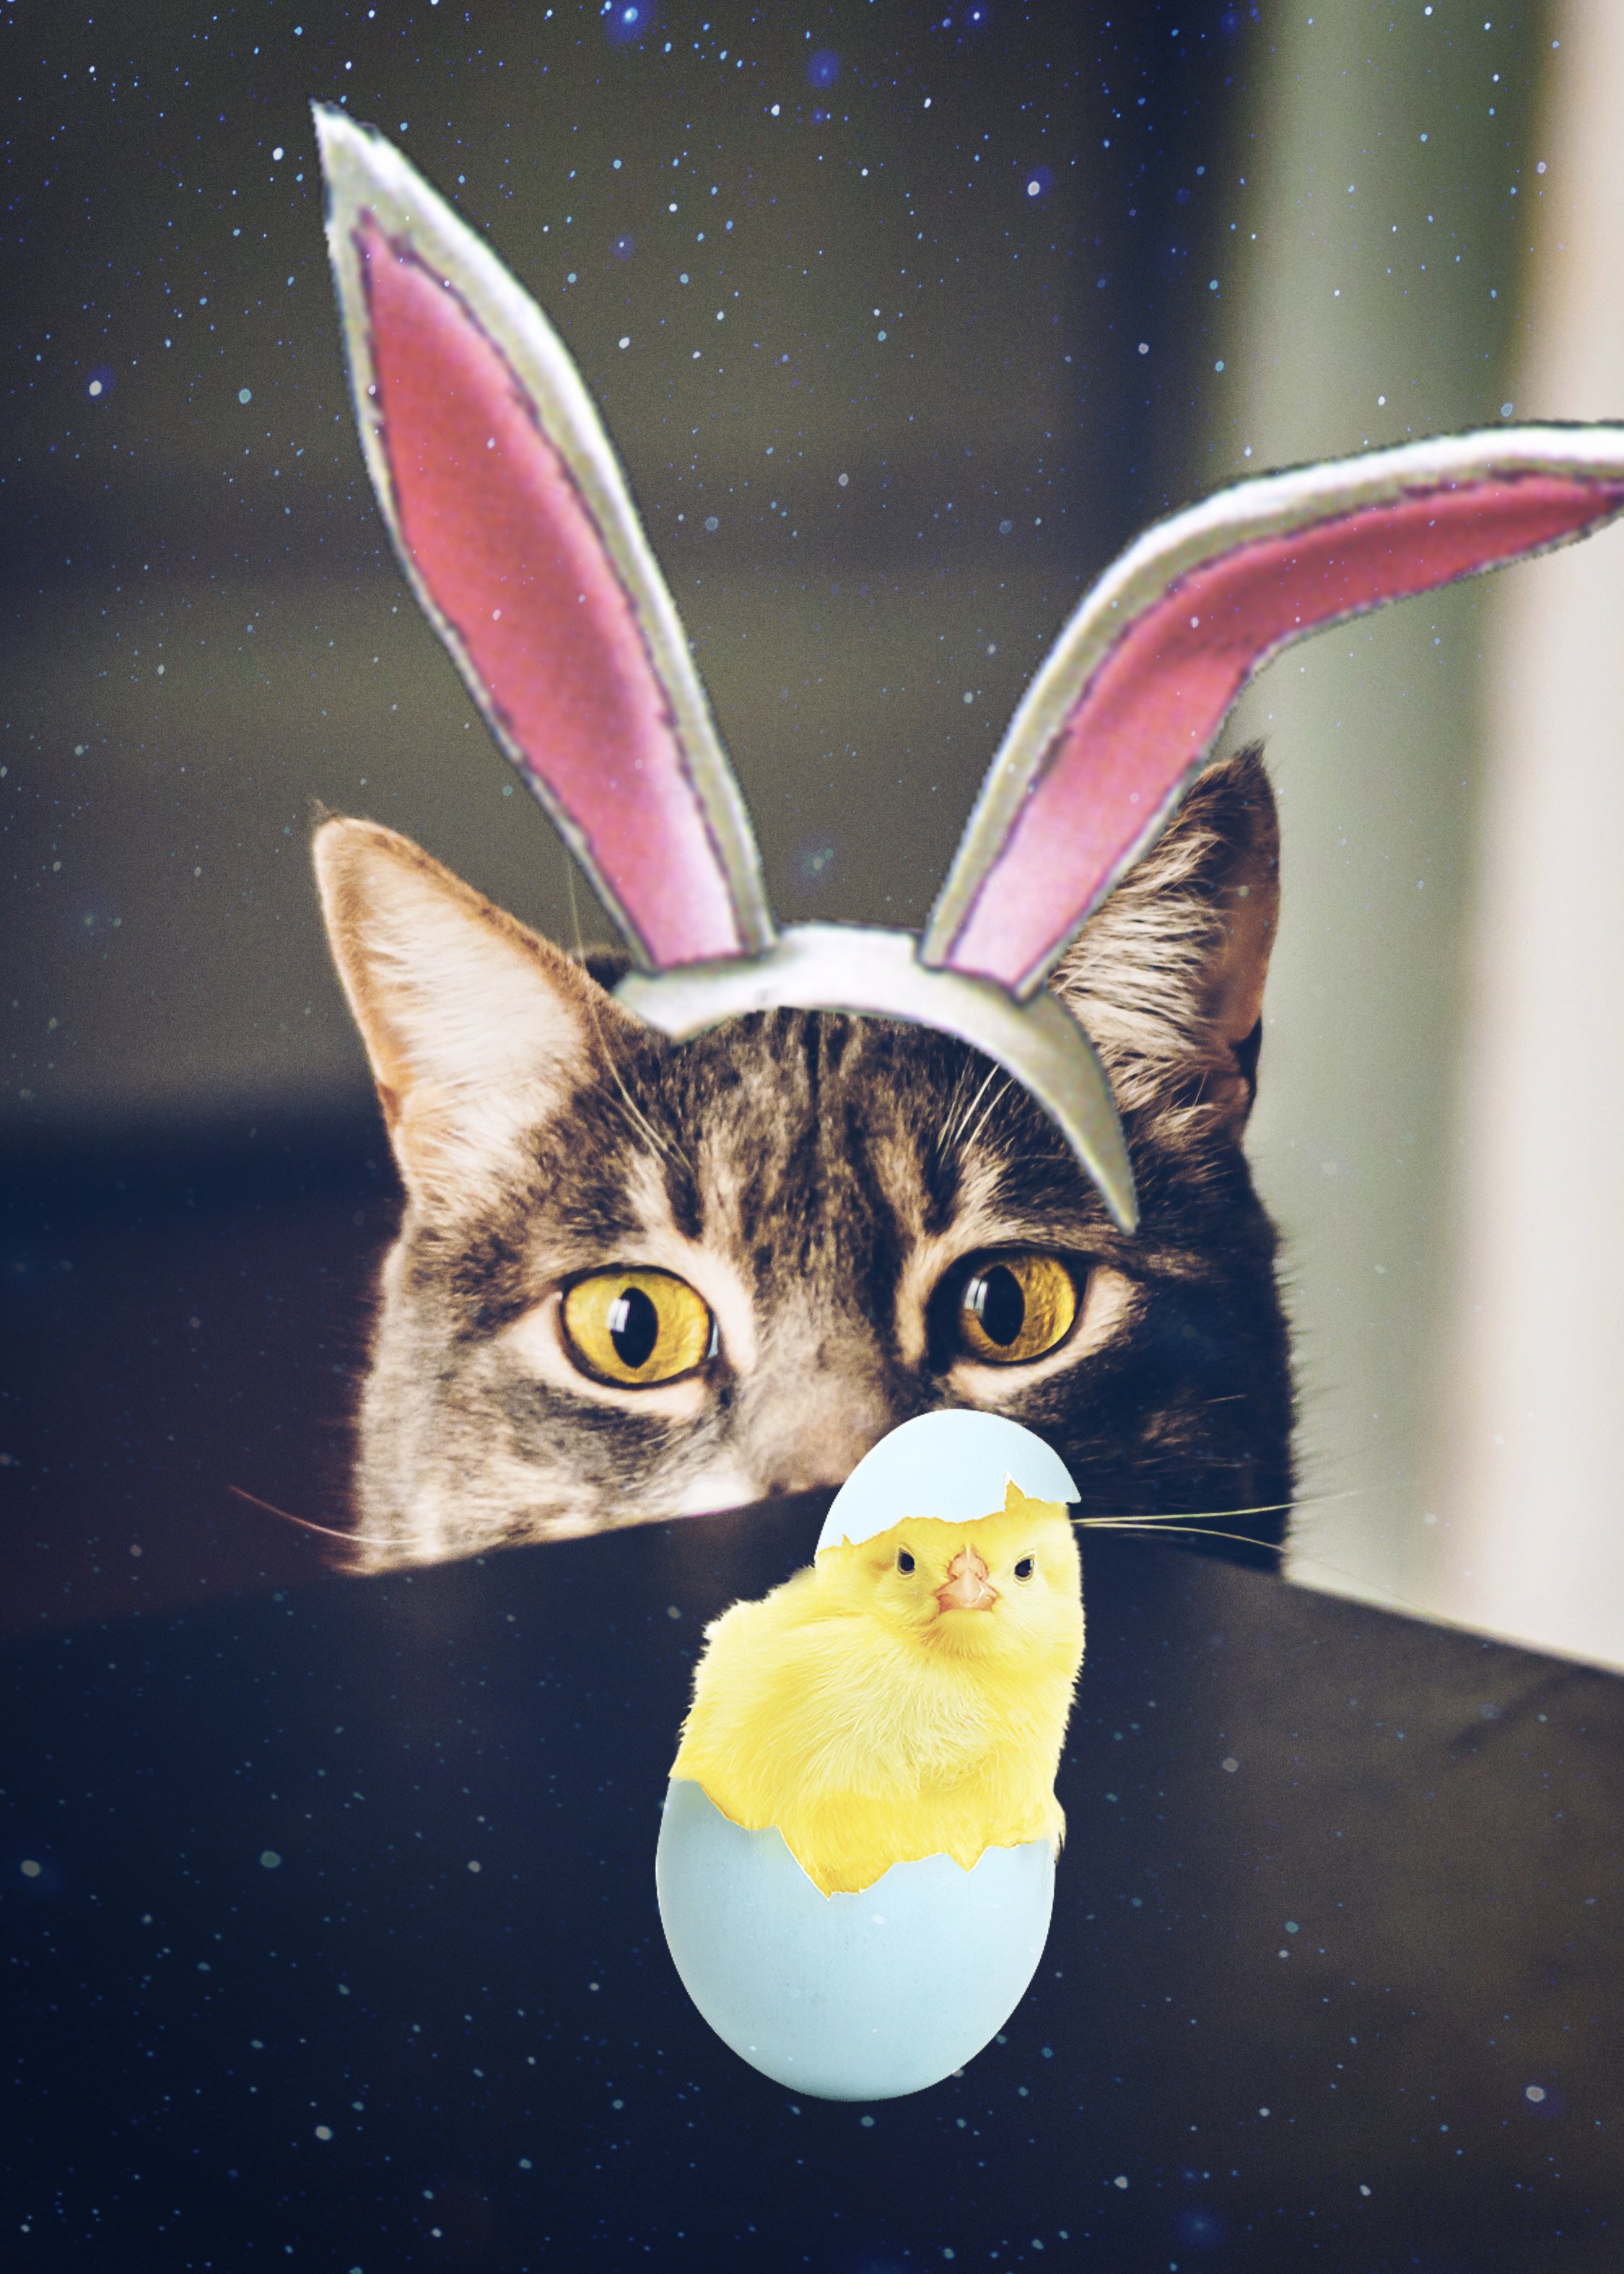 #freetoedit #happyeaster #easter #bunnyears #cat #easterchicks #dodgereffect #stickers #sparkles #stars #madewithpicsart #piscart 